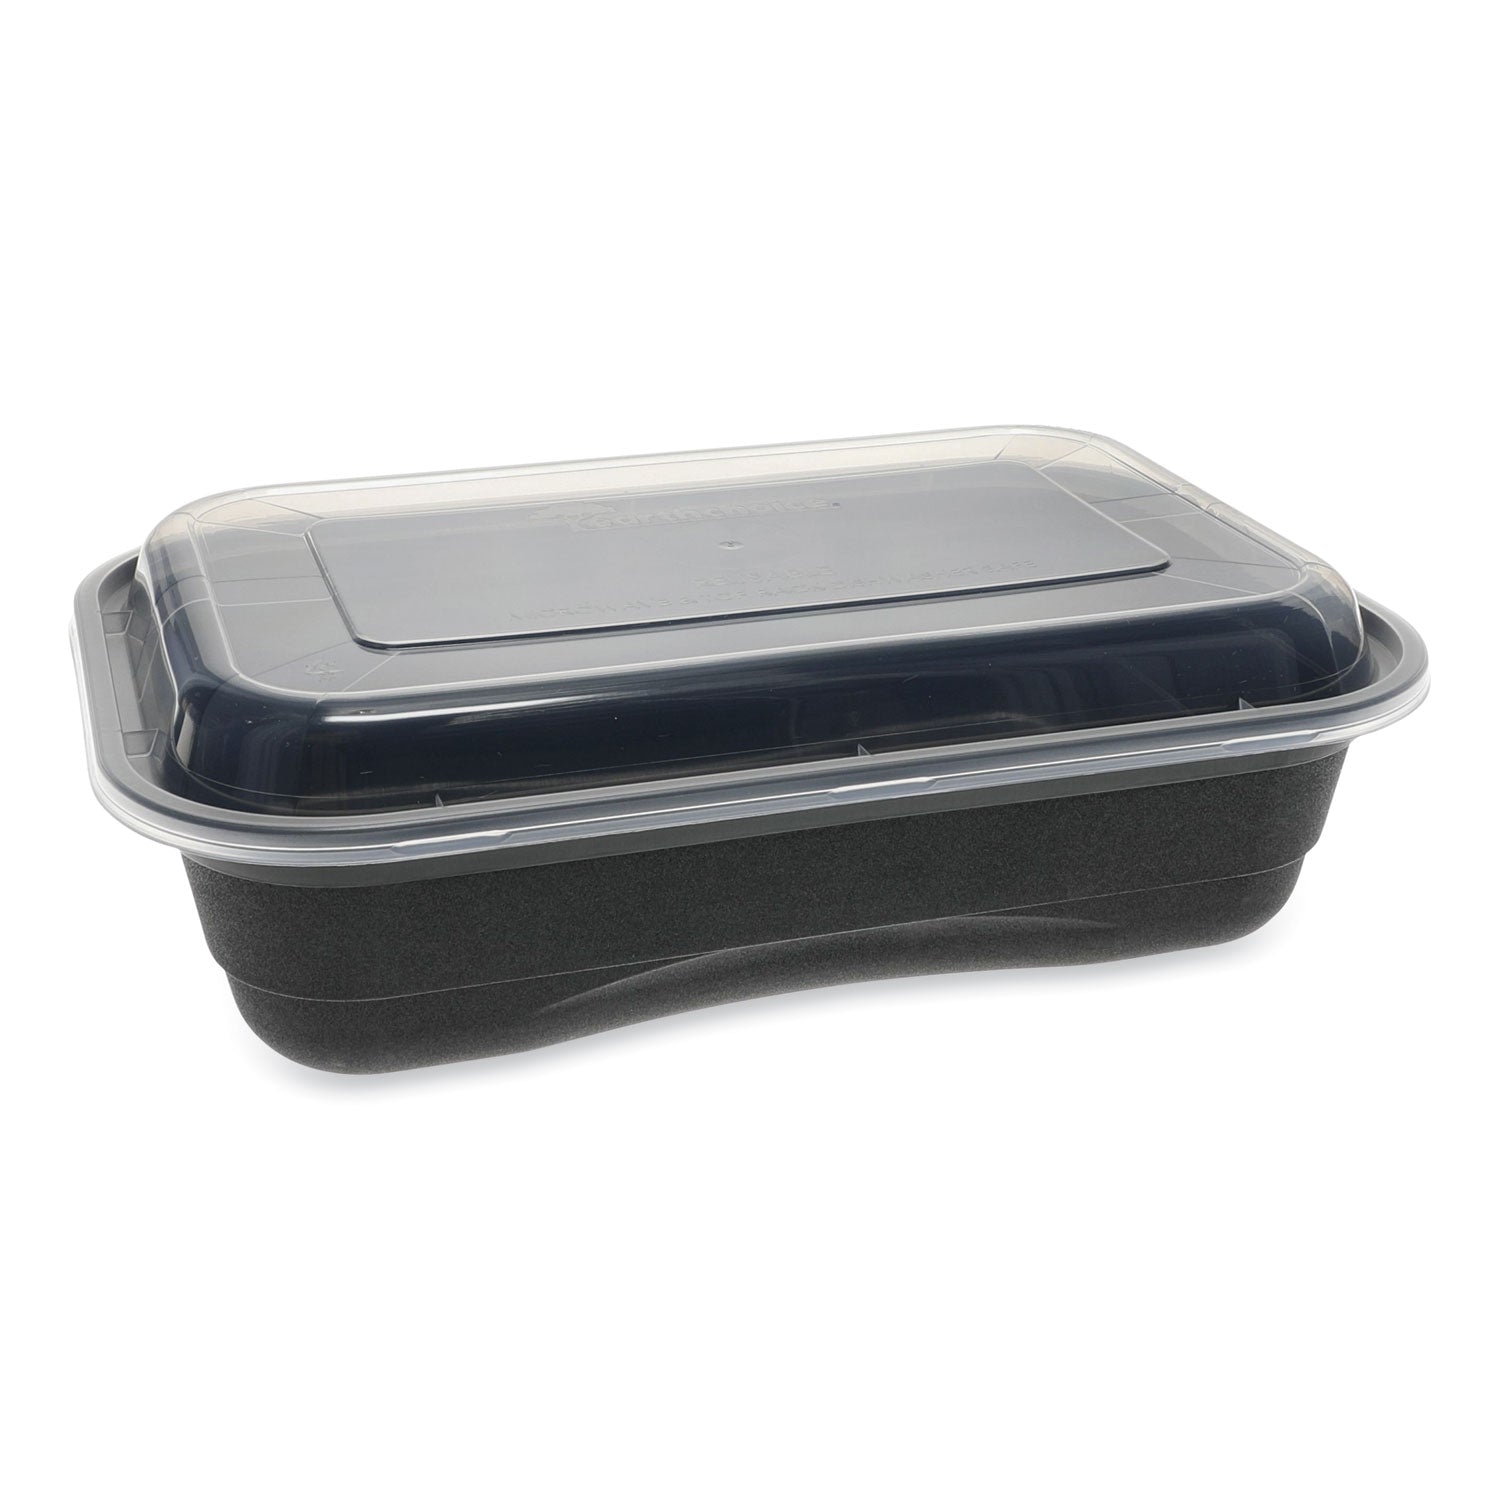 earthchoice-versa2go-microwaveable-container-36-oz-84-x-56-x-2-black-clear-plastic-150-carton_pctnv2grt3688b - 1